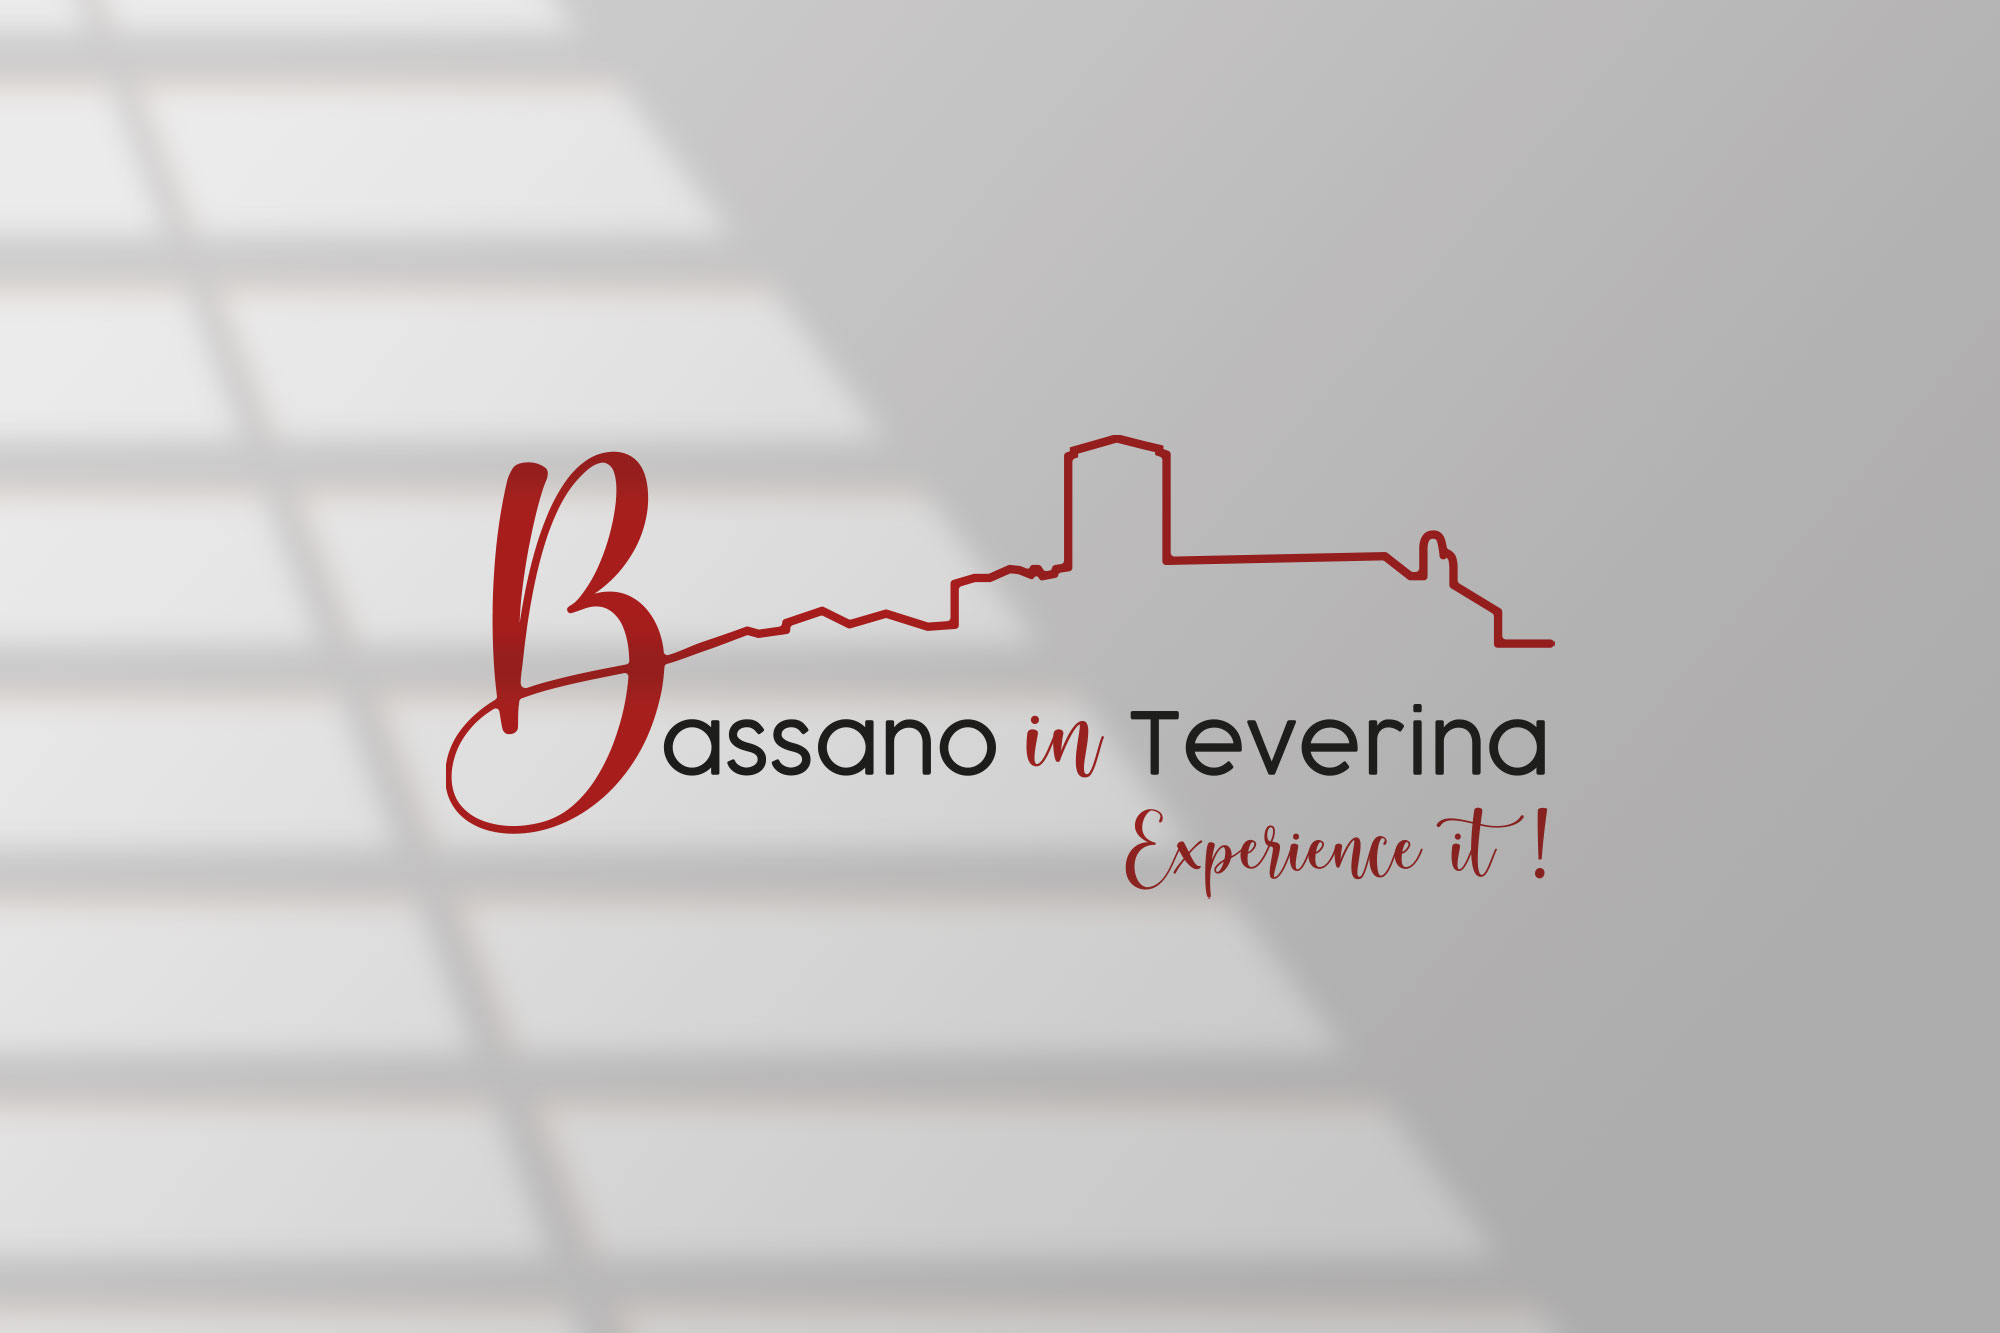 Bassano in Teverina turismo